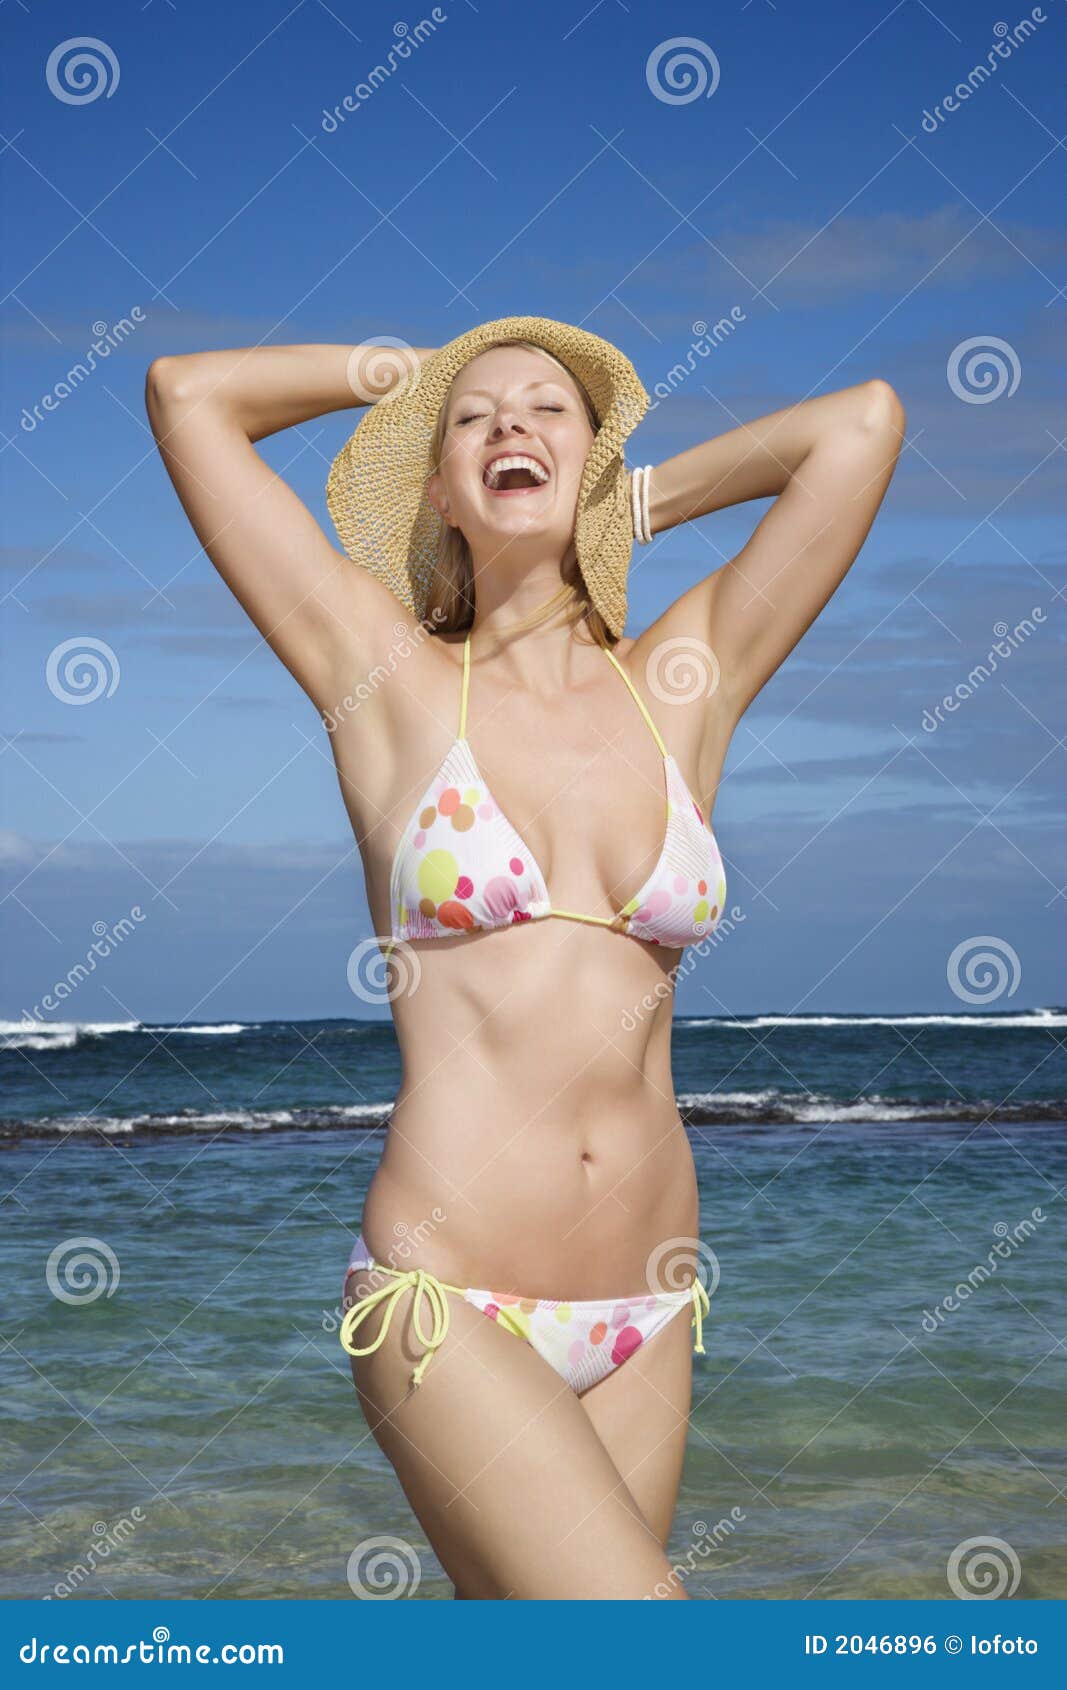 angry young teens wife bikini beach